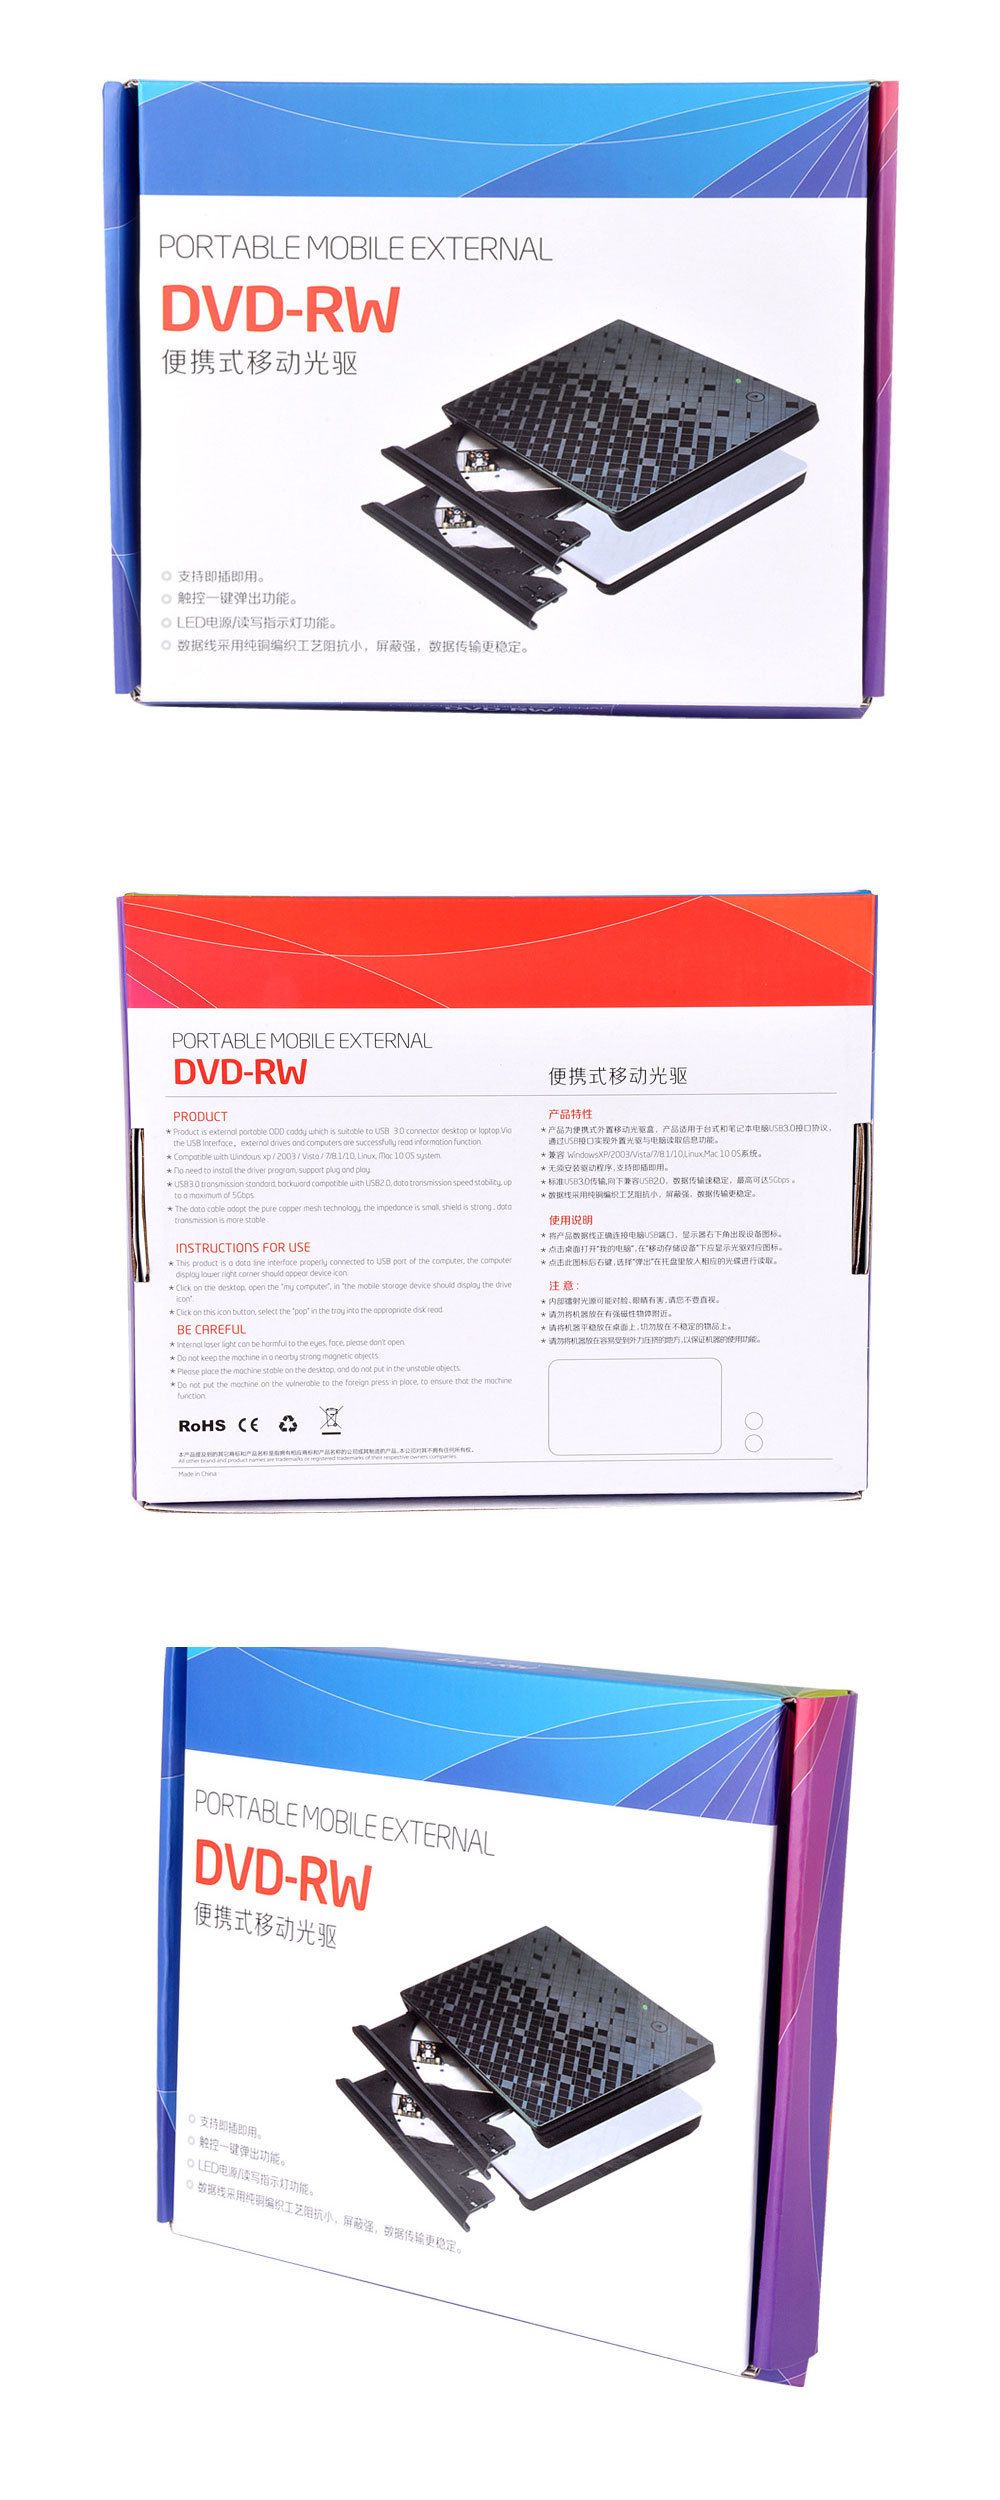 USB-30-Ultra-Thin-Touch-External-DVD-Drive-DVD-RW-Player-Portable-Optical-Drive-Burner-Writer-Rewrit-1752132